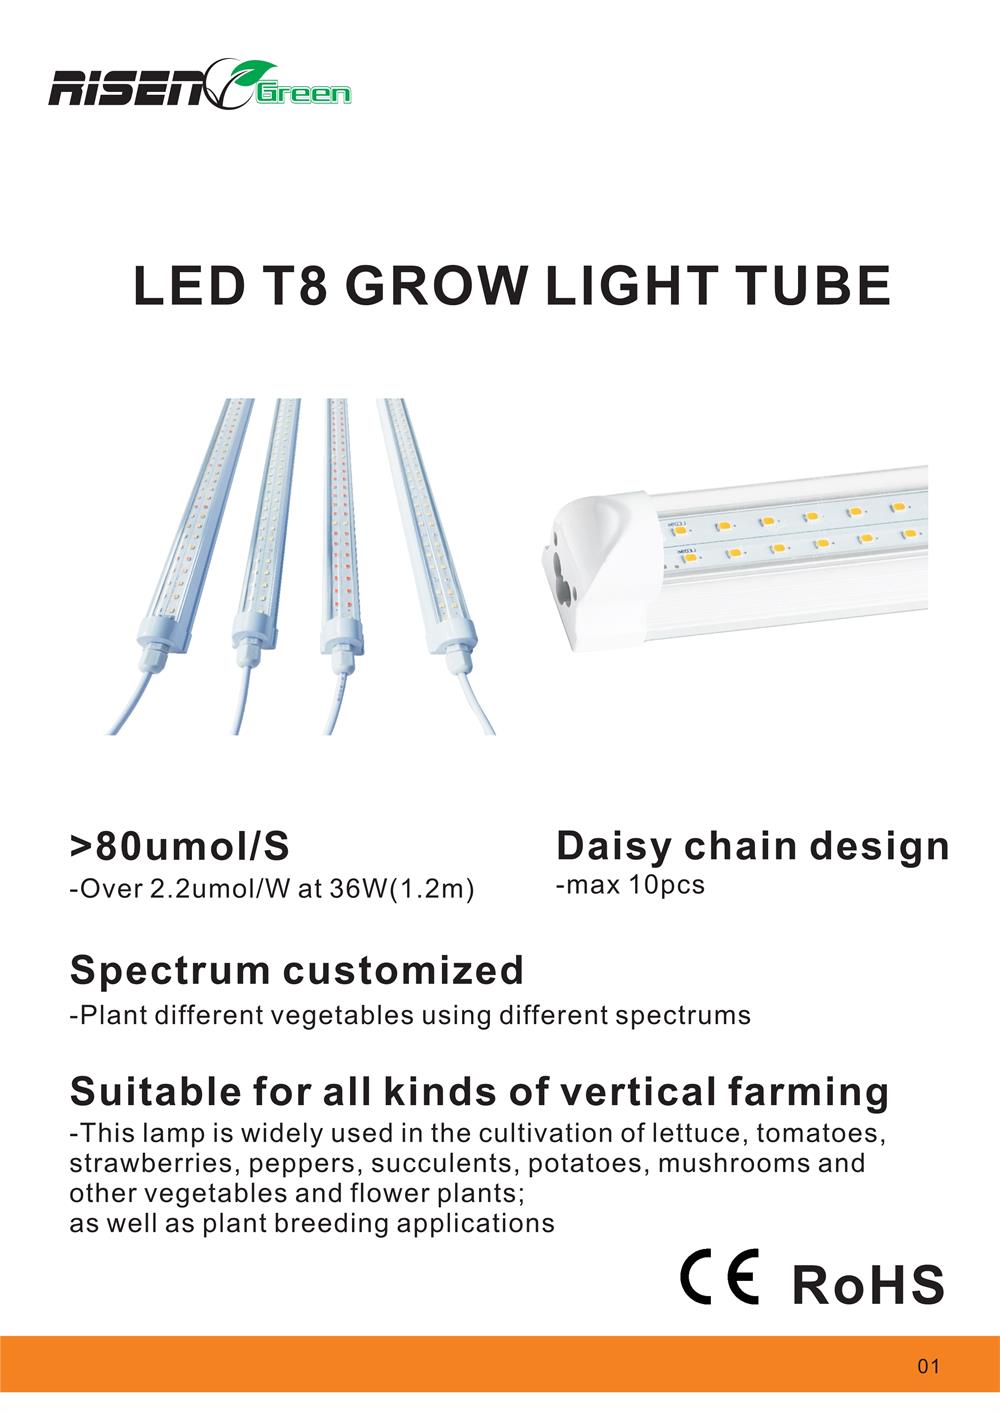 LED T8 GROW LIGHT TUBE (1)os1